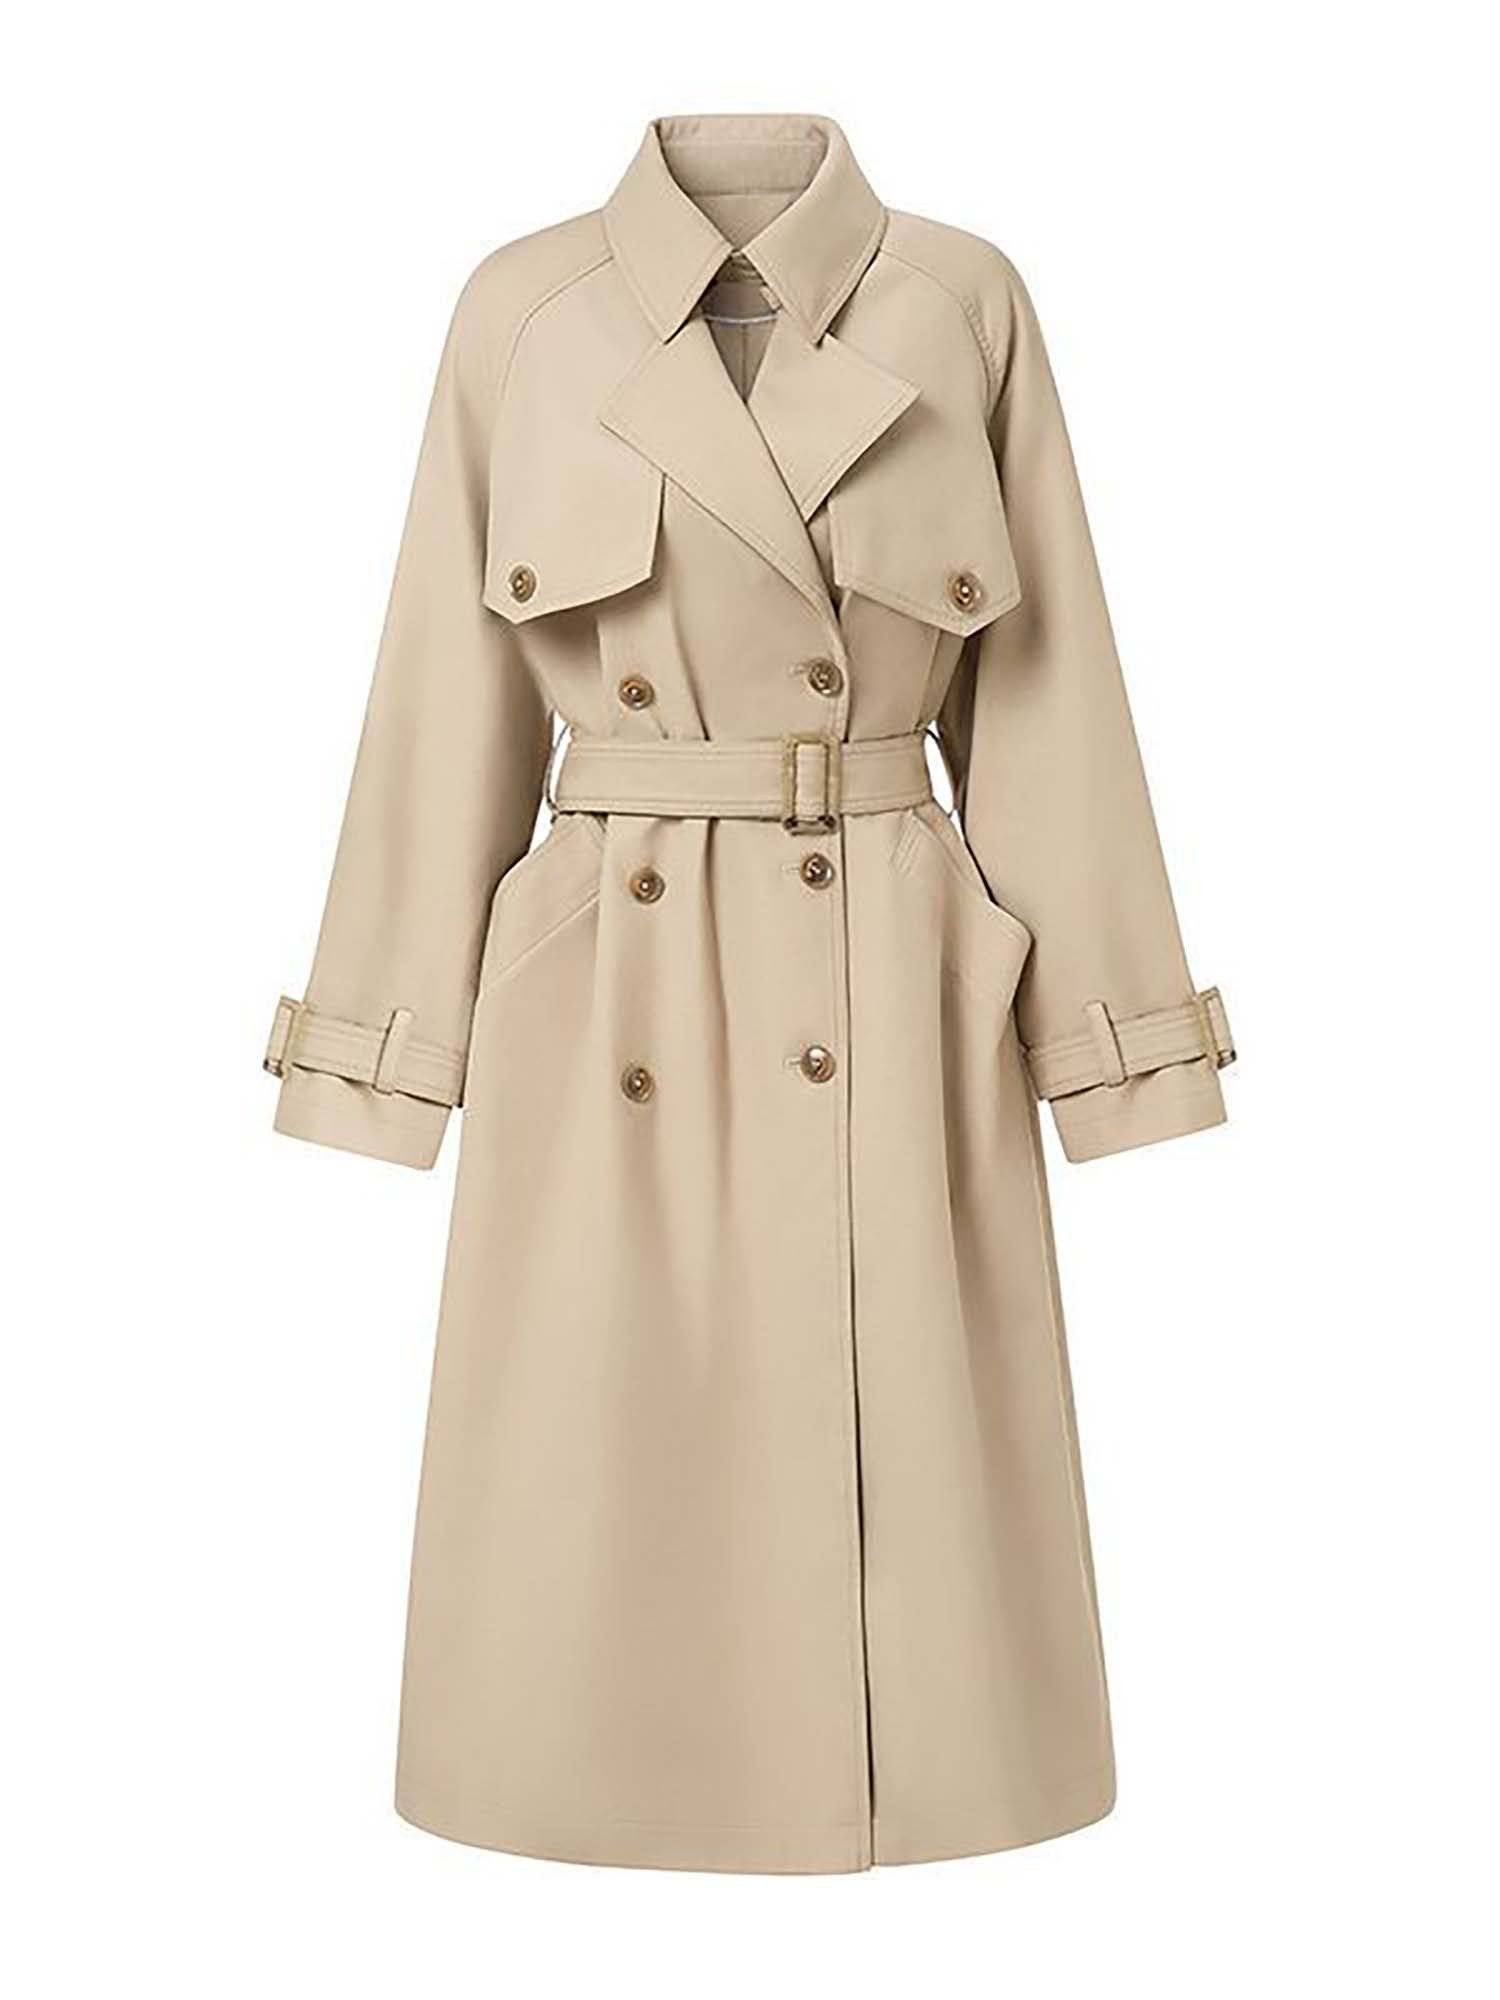 FIDDY Trenchcoat Khakifarbener Trenchcoat für Damen eleganter Mantel im neuen Stil